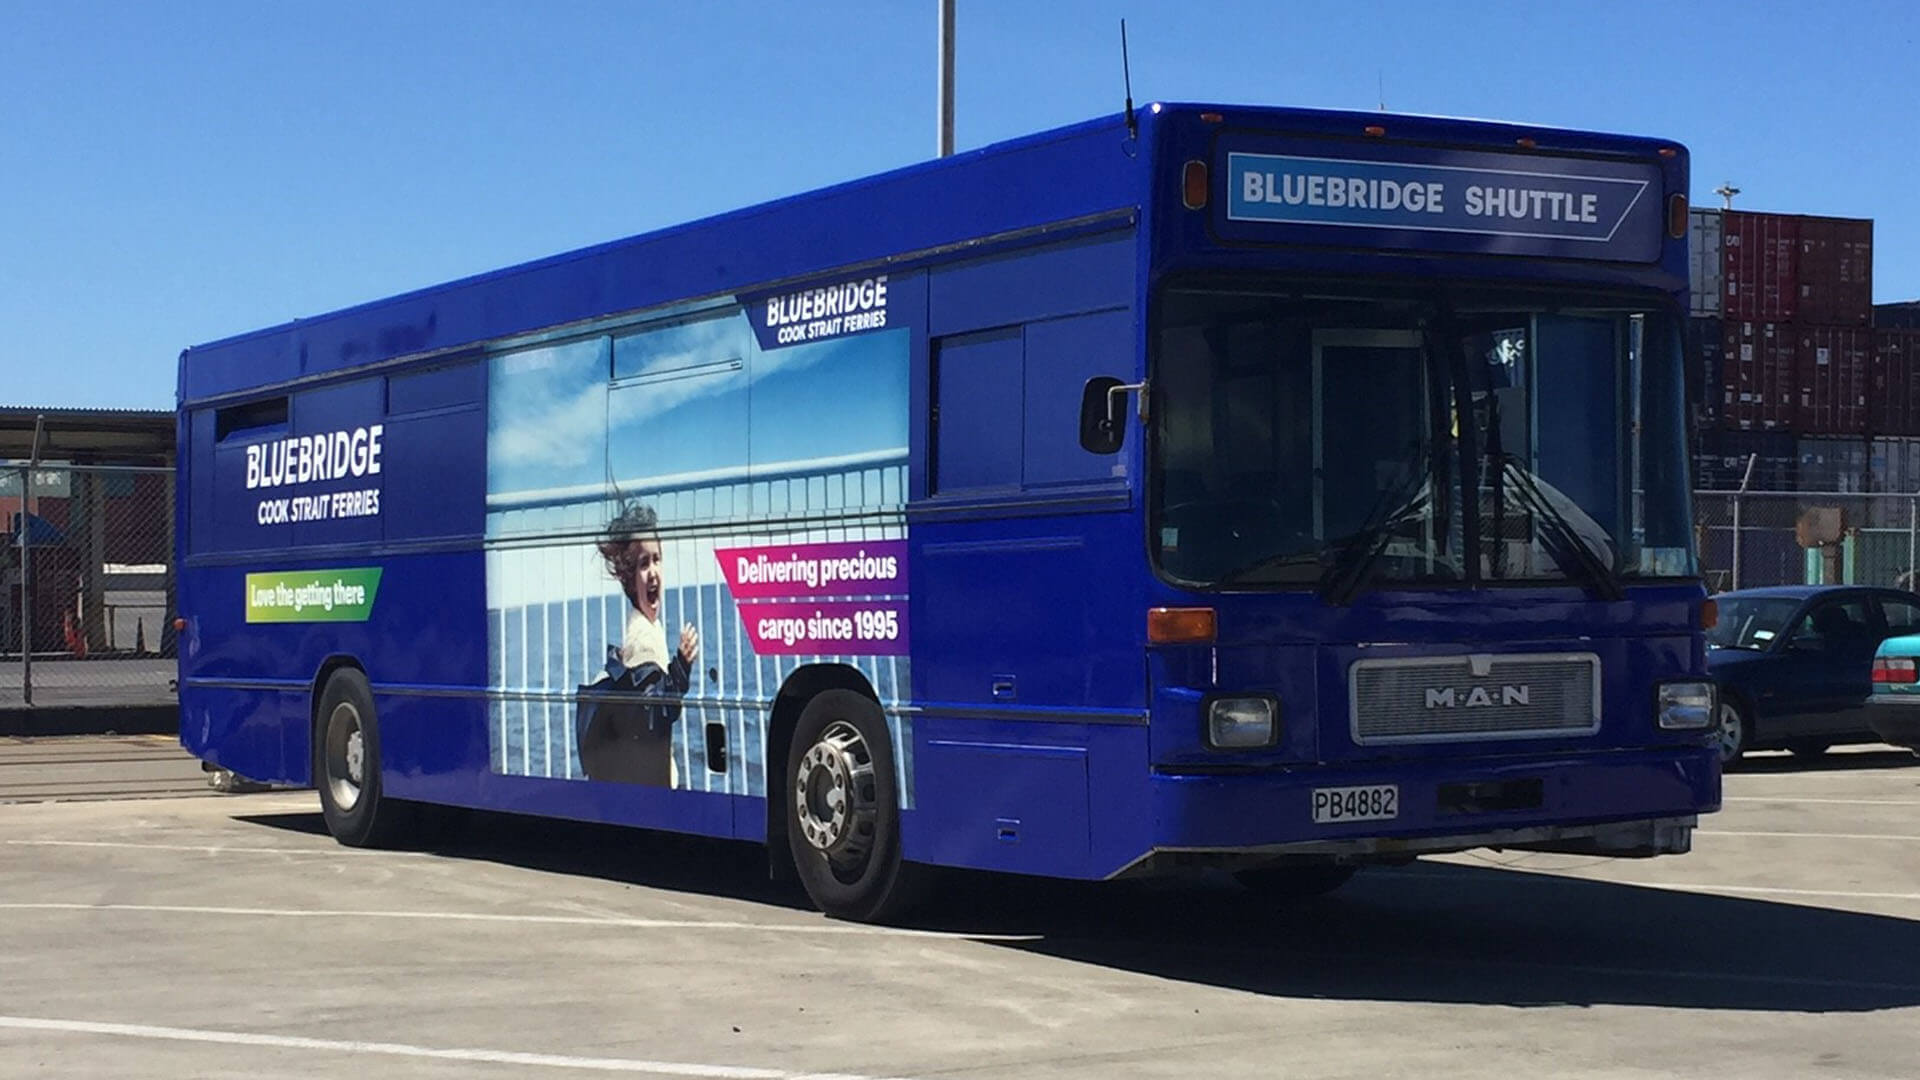 Bluebridge ferry free Picton shuttle bus